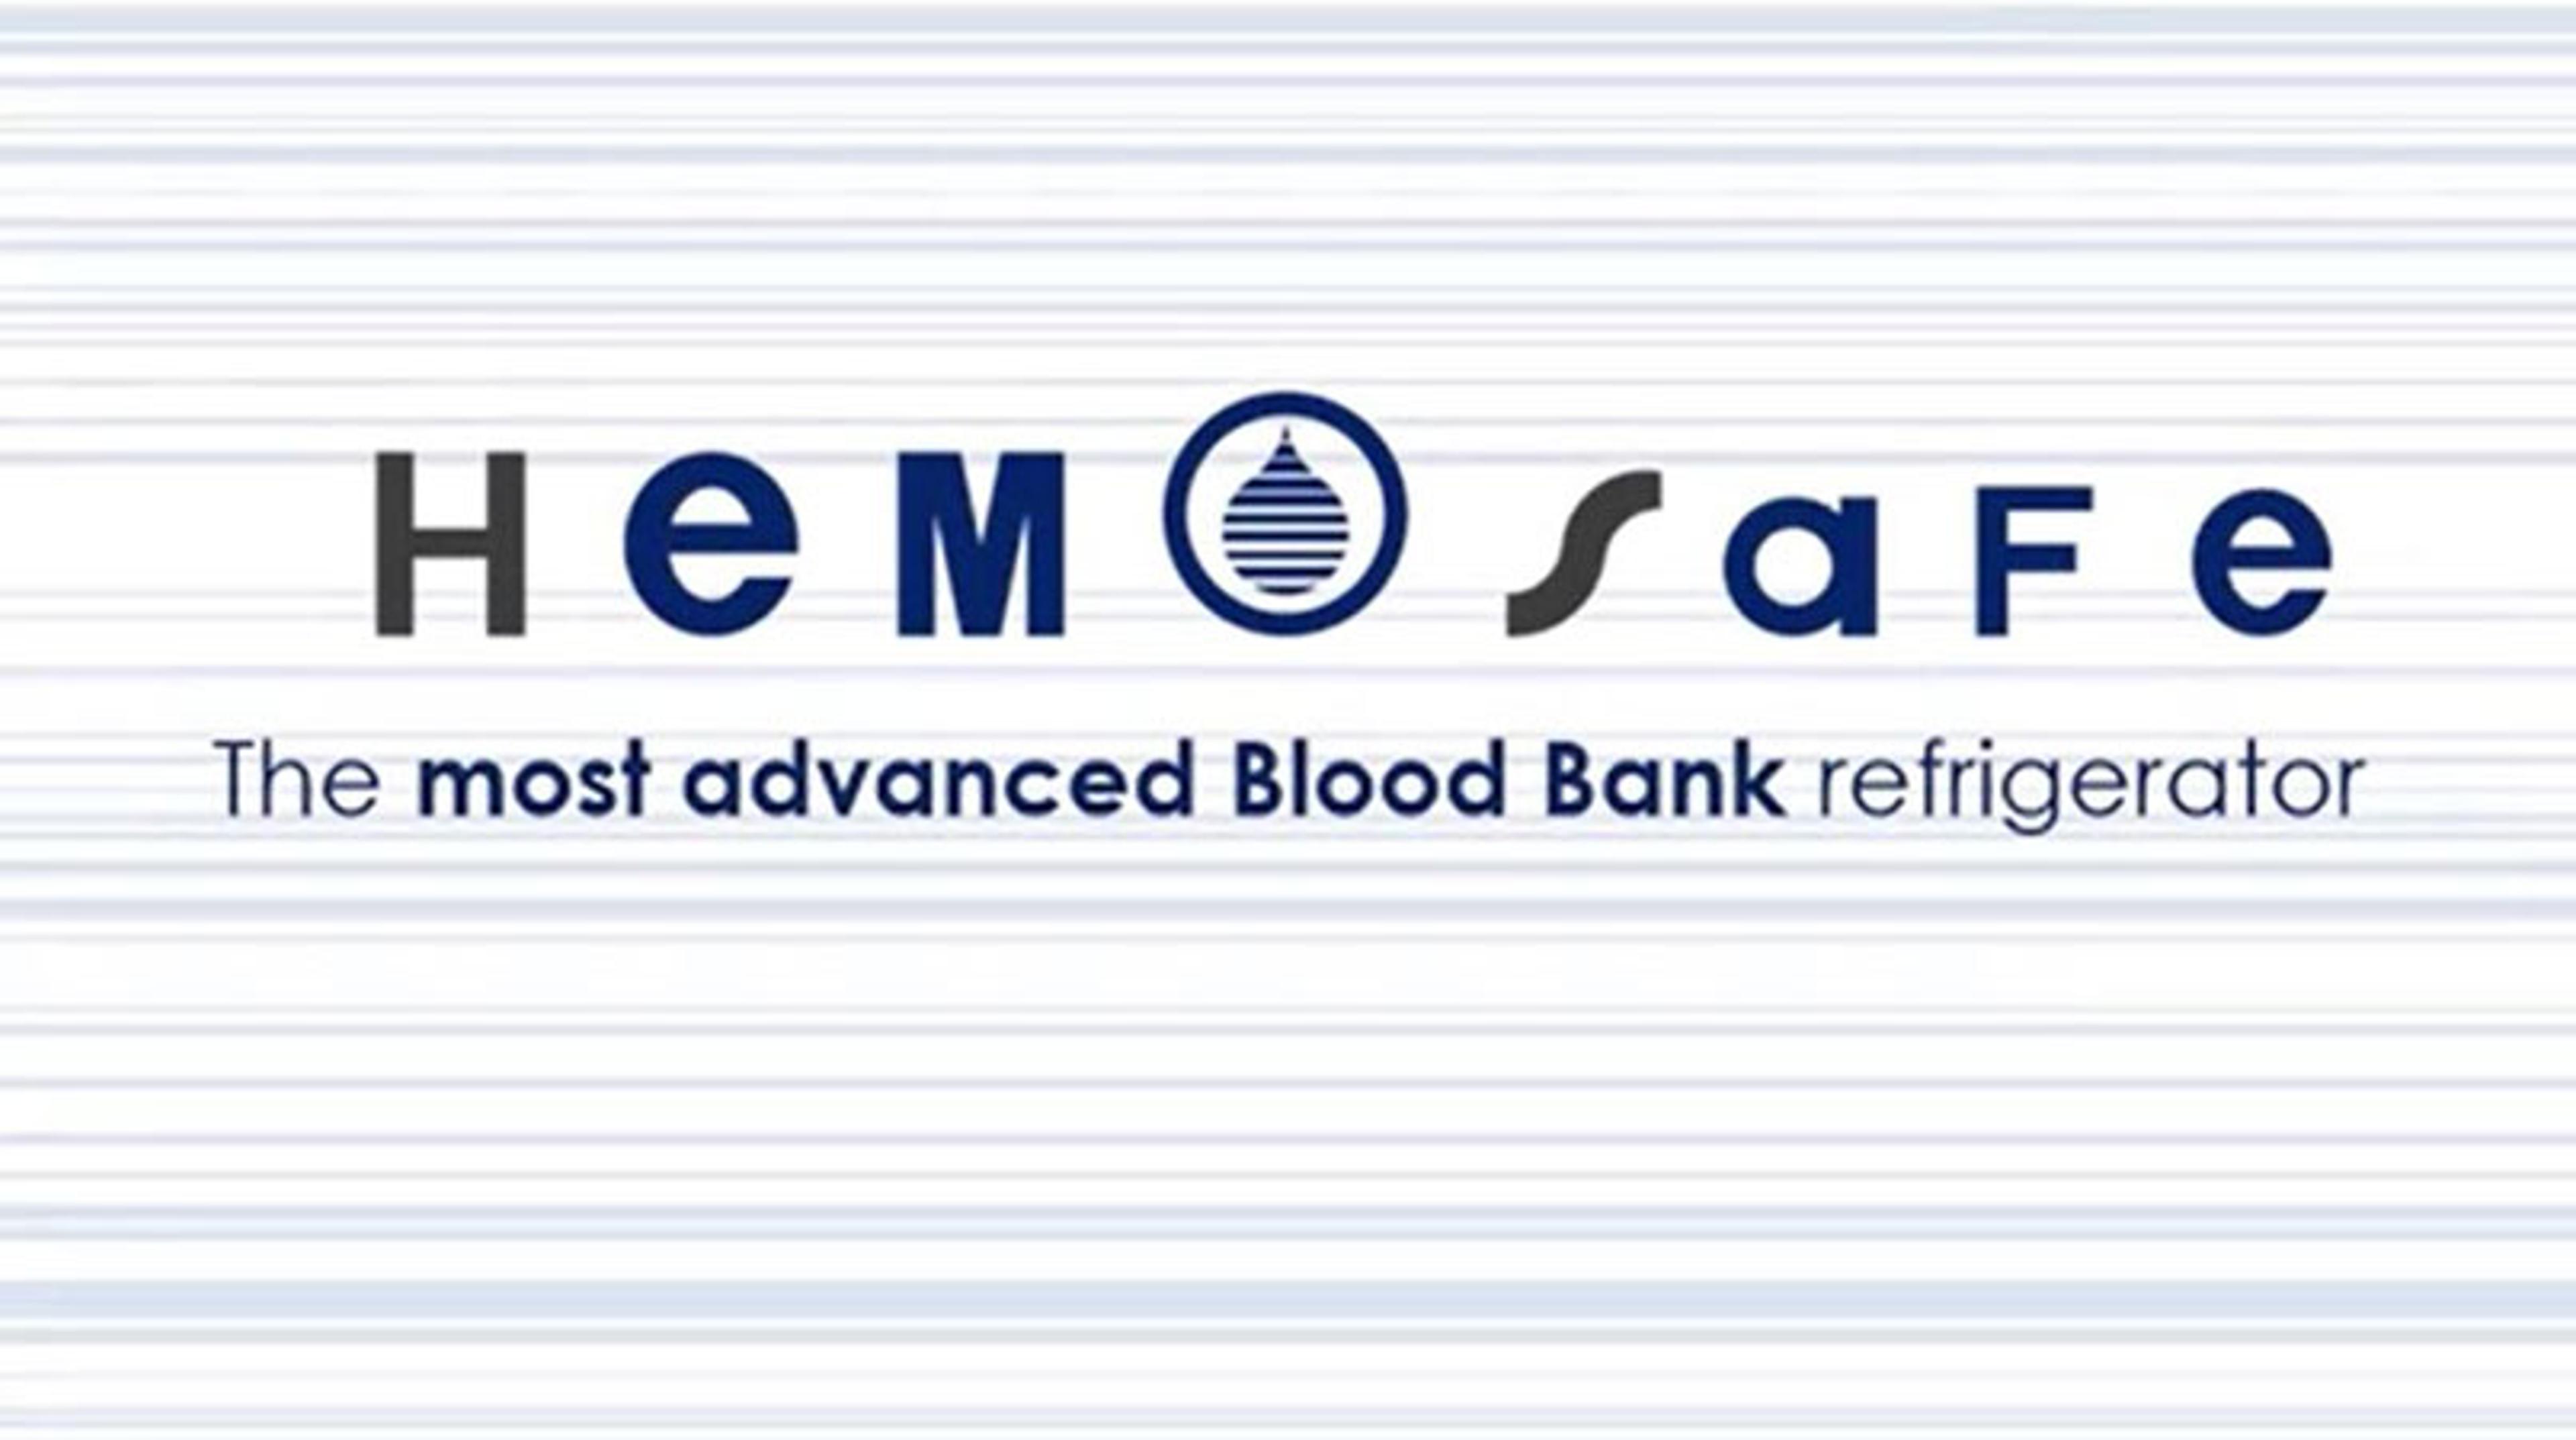 Hemosafe: The most advanced blood bank refrigerator